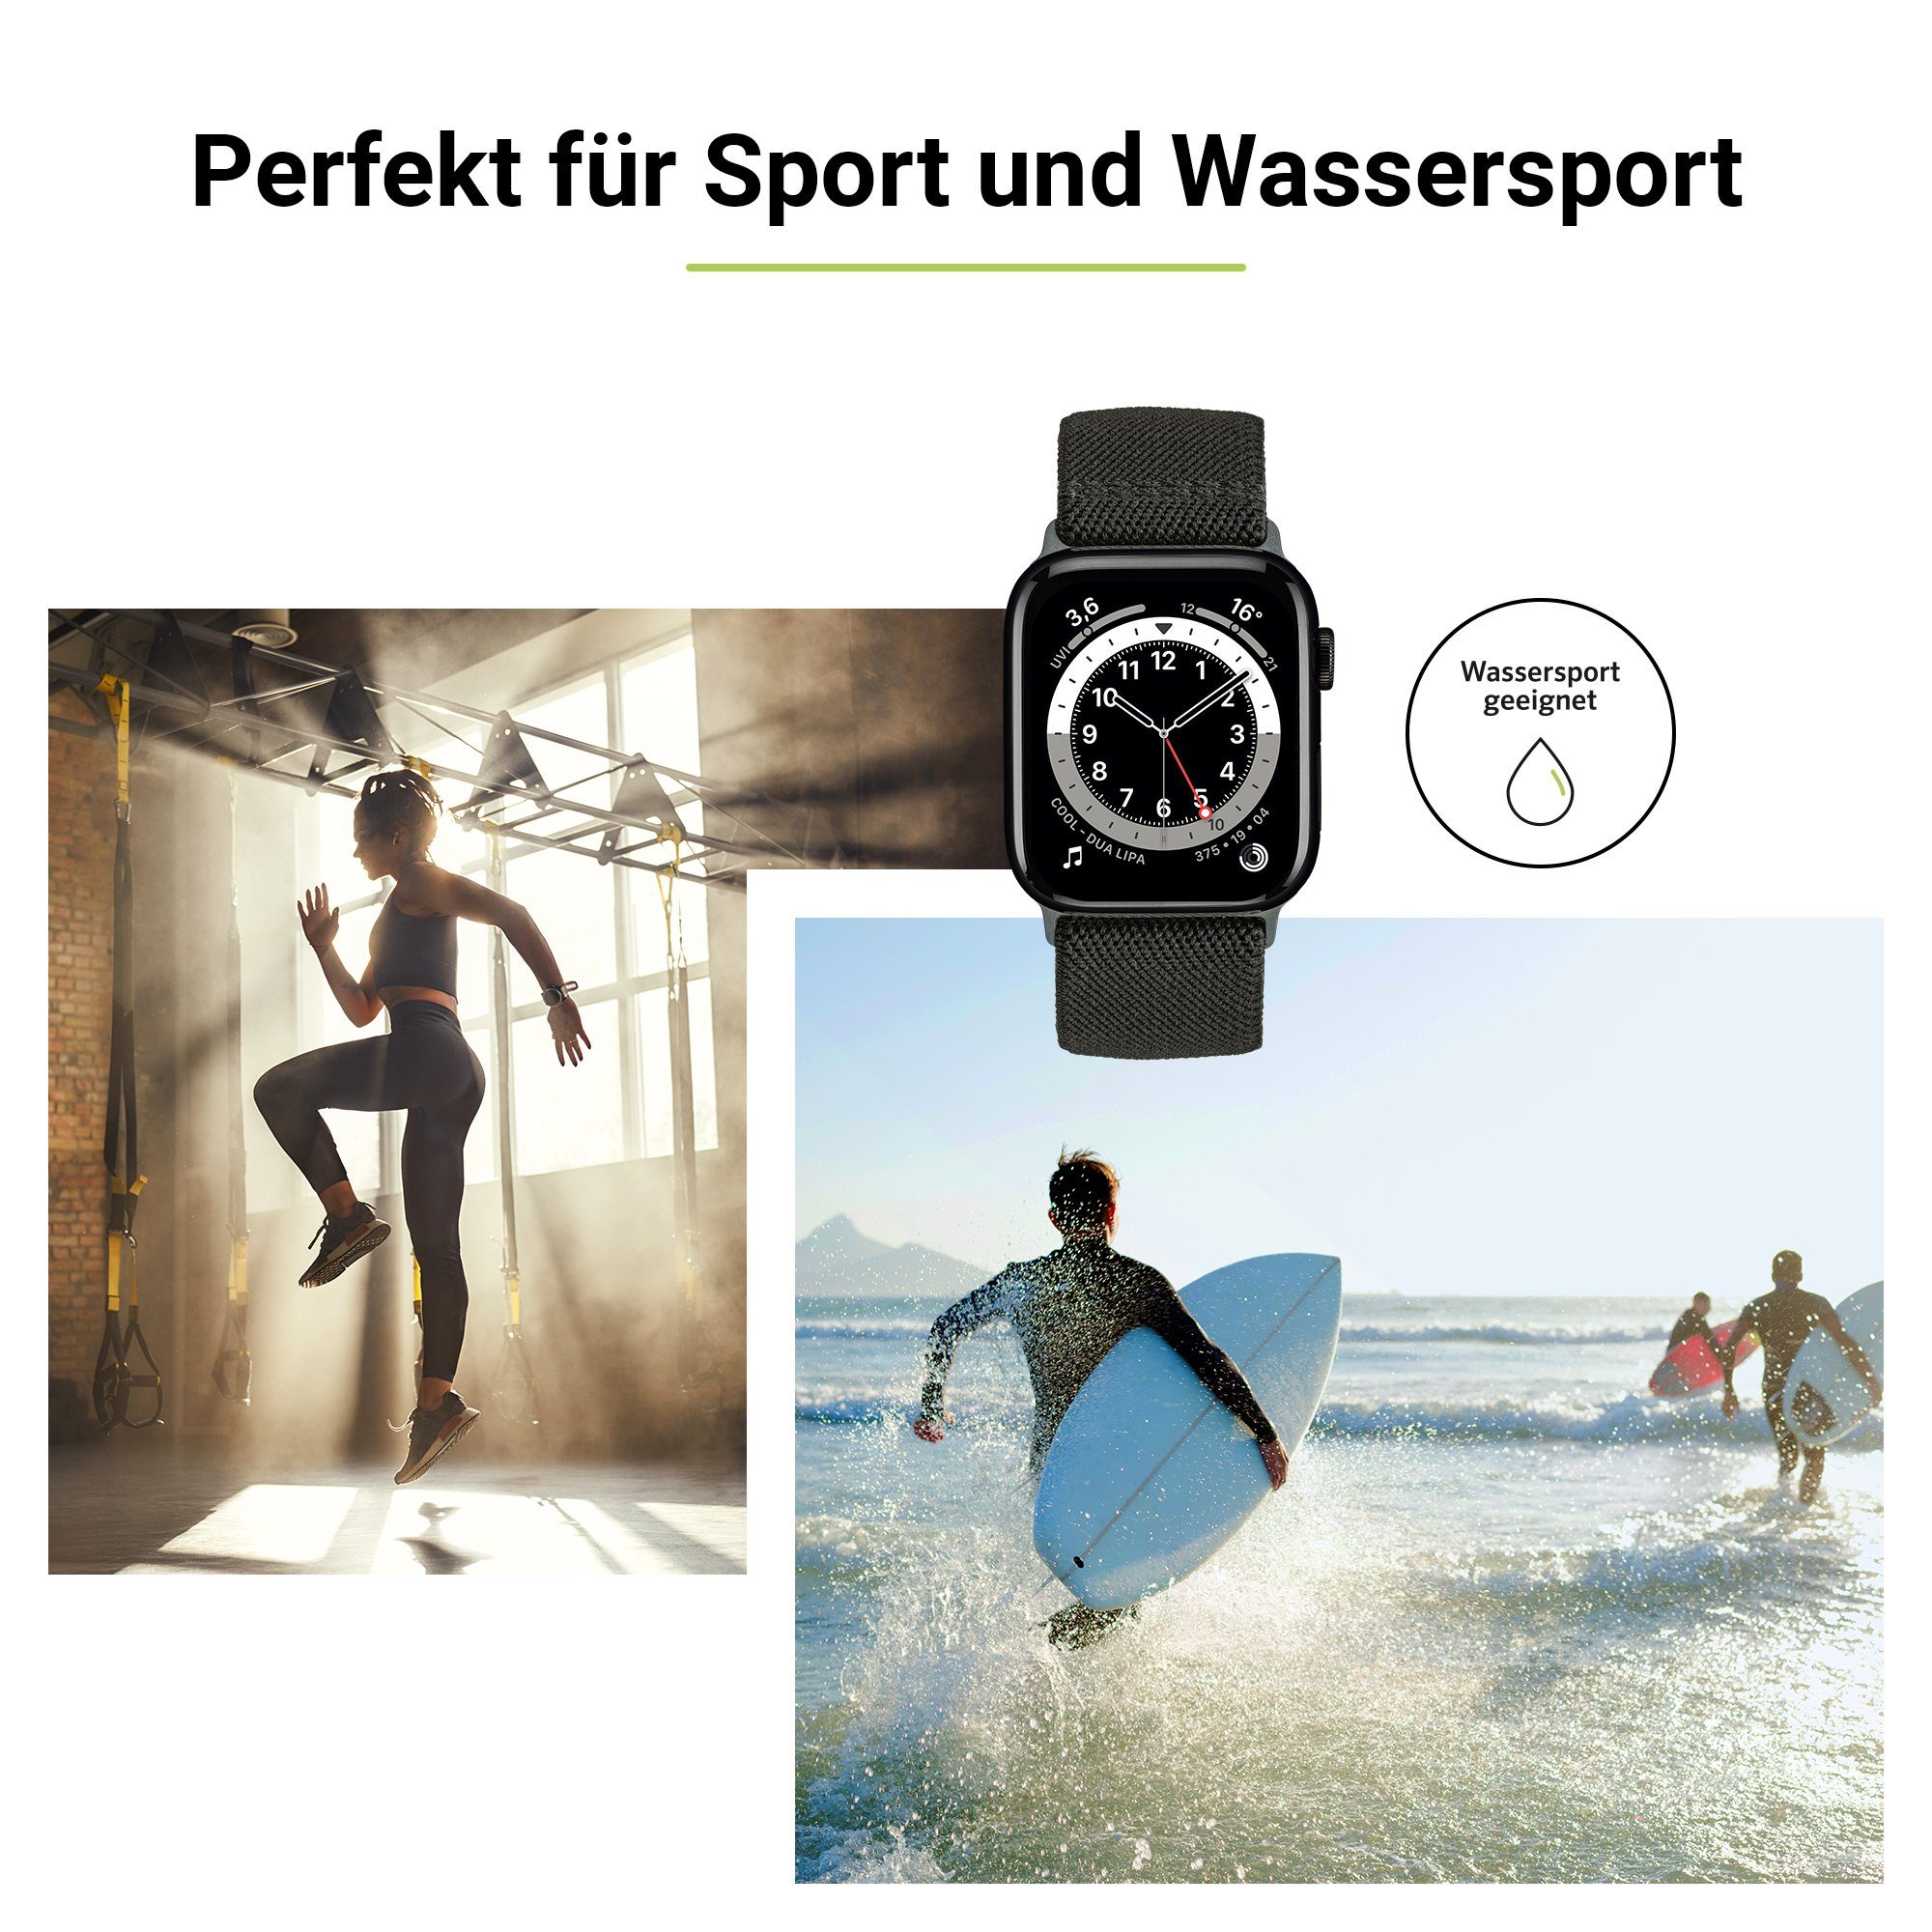 SE Textil 2 (44mm), & Ultra Flex, (42mm) Smartwatch-Armband Space-Grau, mit (45mm), Apple 3-1 6-4 Watch Artwizz WatchBand Adapter, 9-7 Uhrenarmband / (49mm),